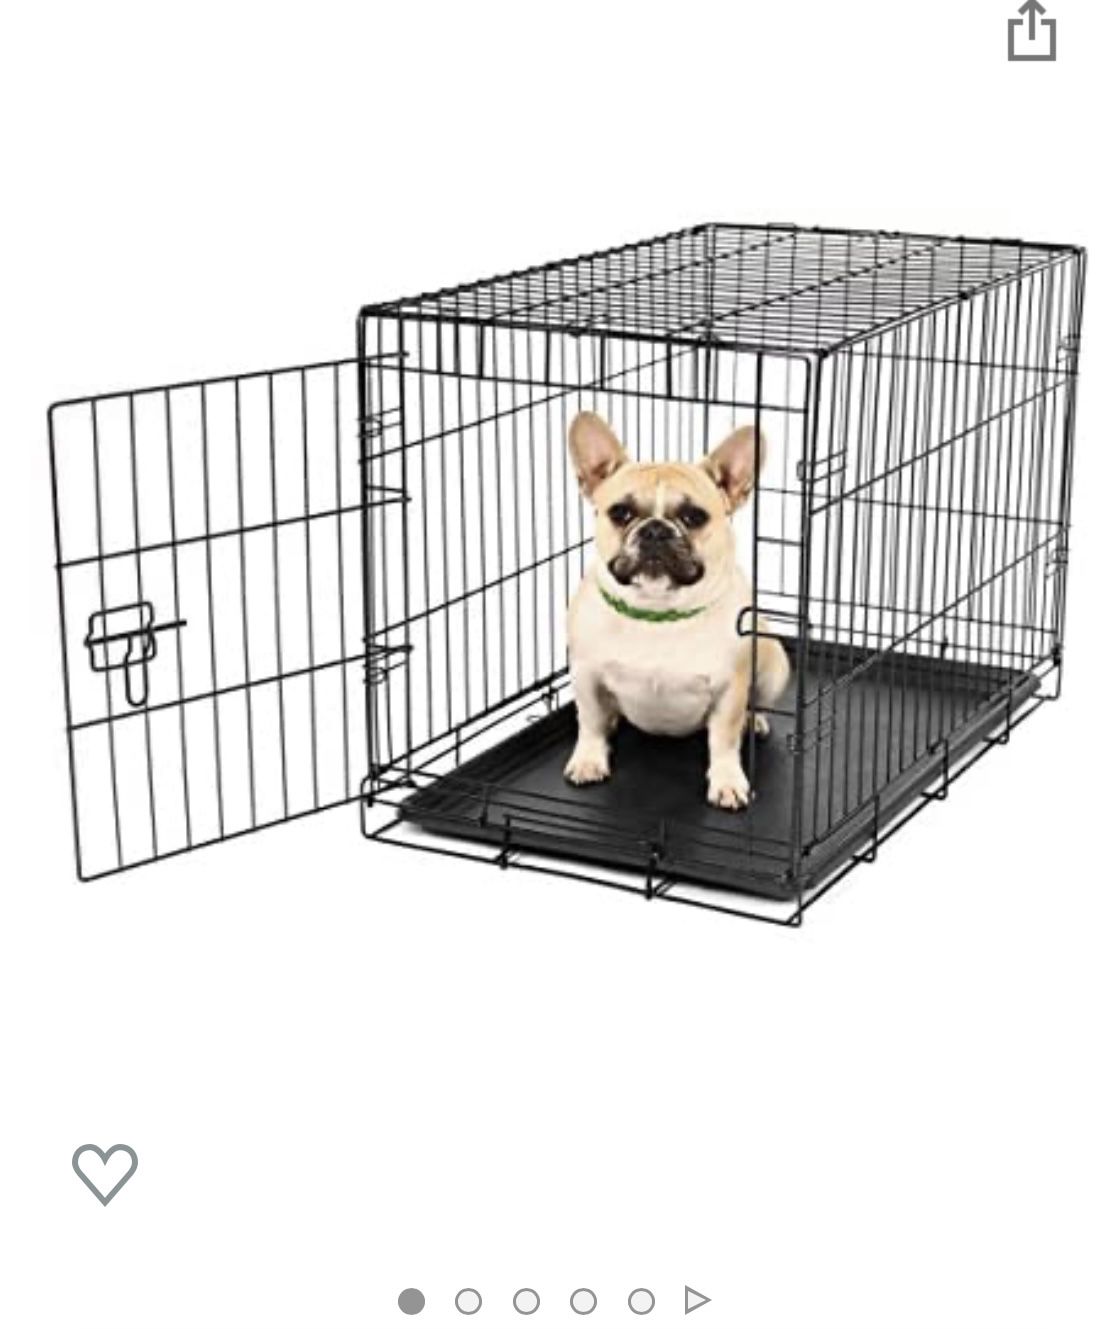 Dog Crate Cage - size medium adjustable